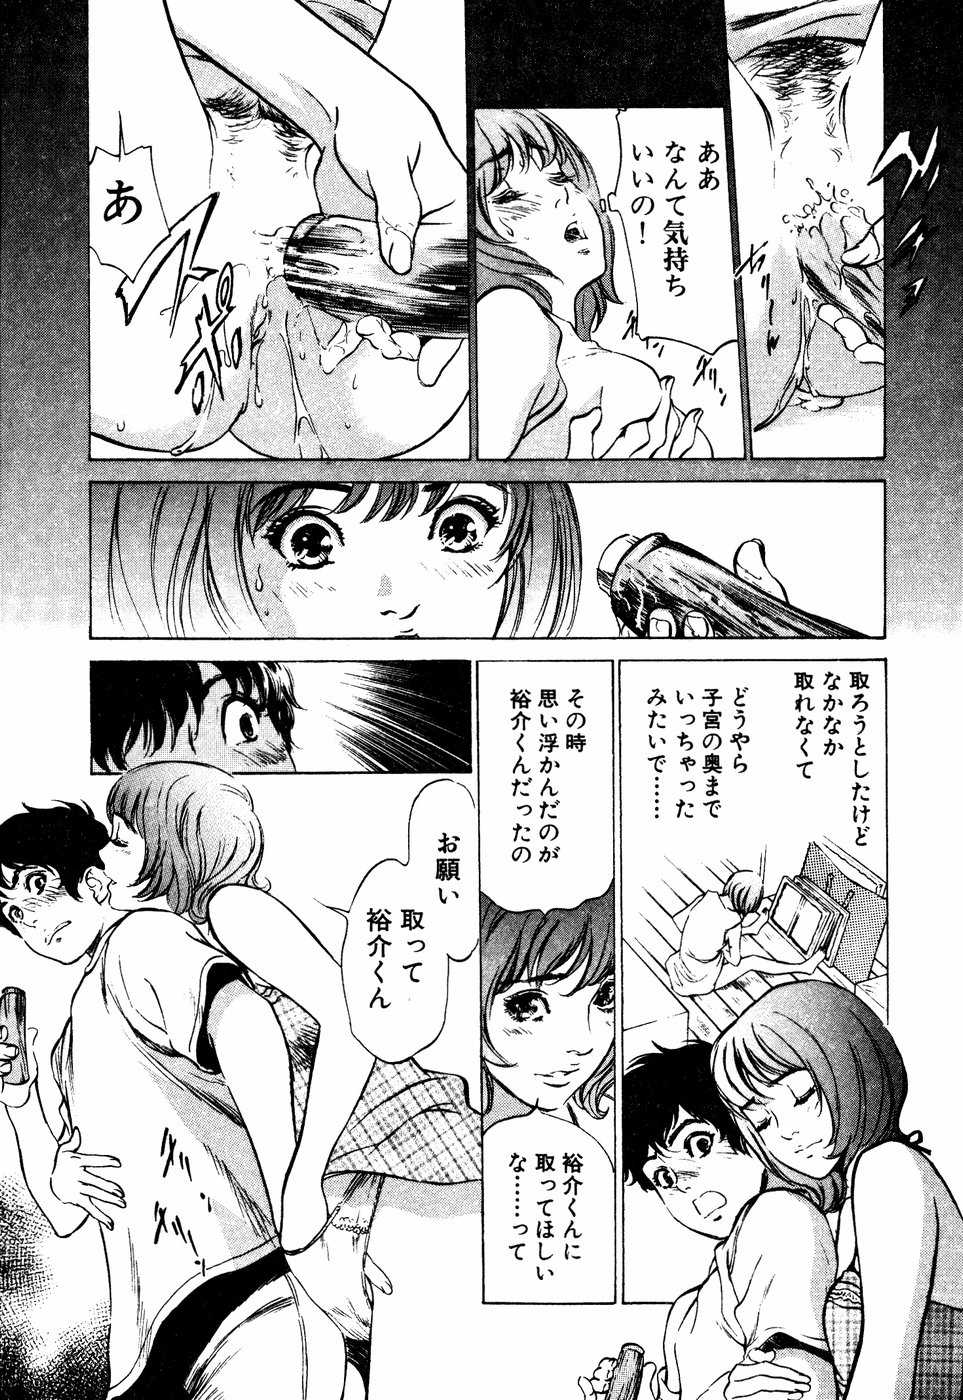 [Kaoru Hazuki] Antique Romantic Vol.3 Mitsutsubo Kantei Pen [八月薫] アンチックロマンチック Vol.3 蜜壺鑑定編